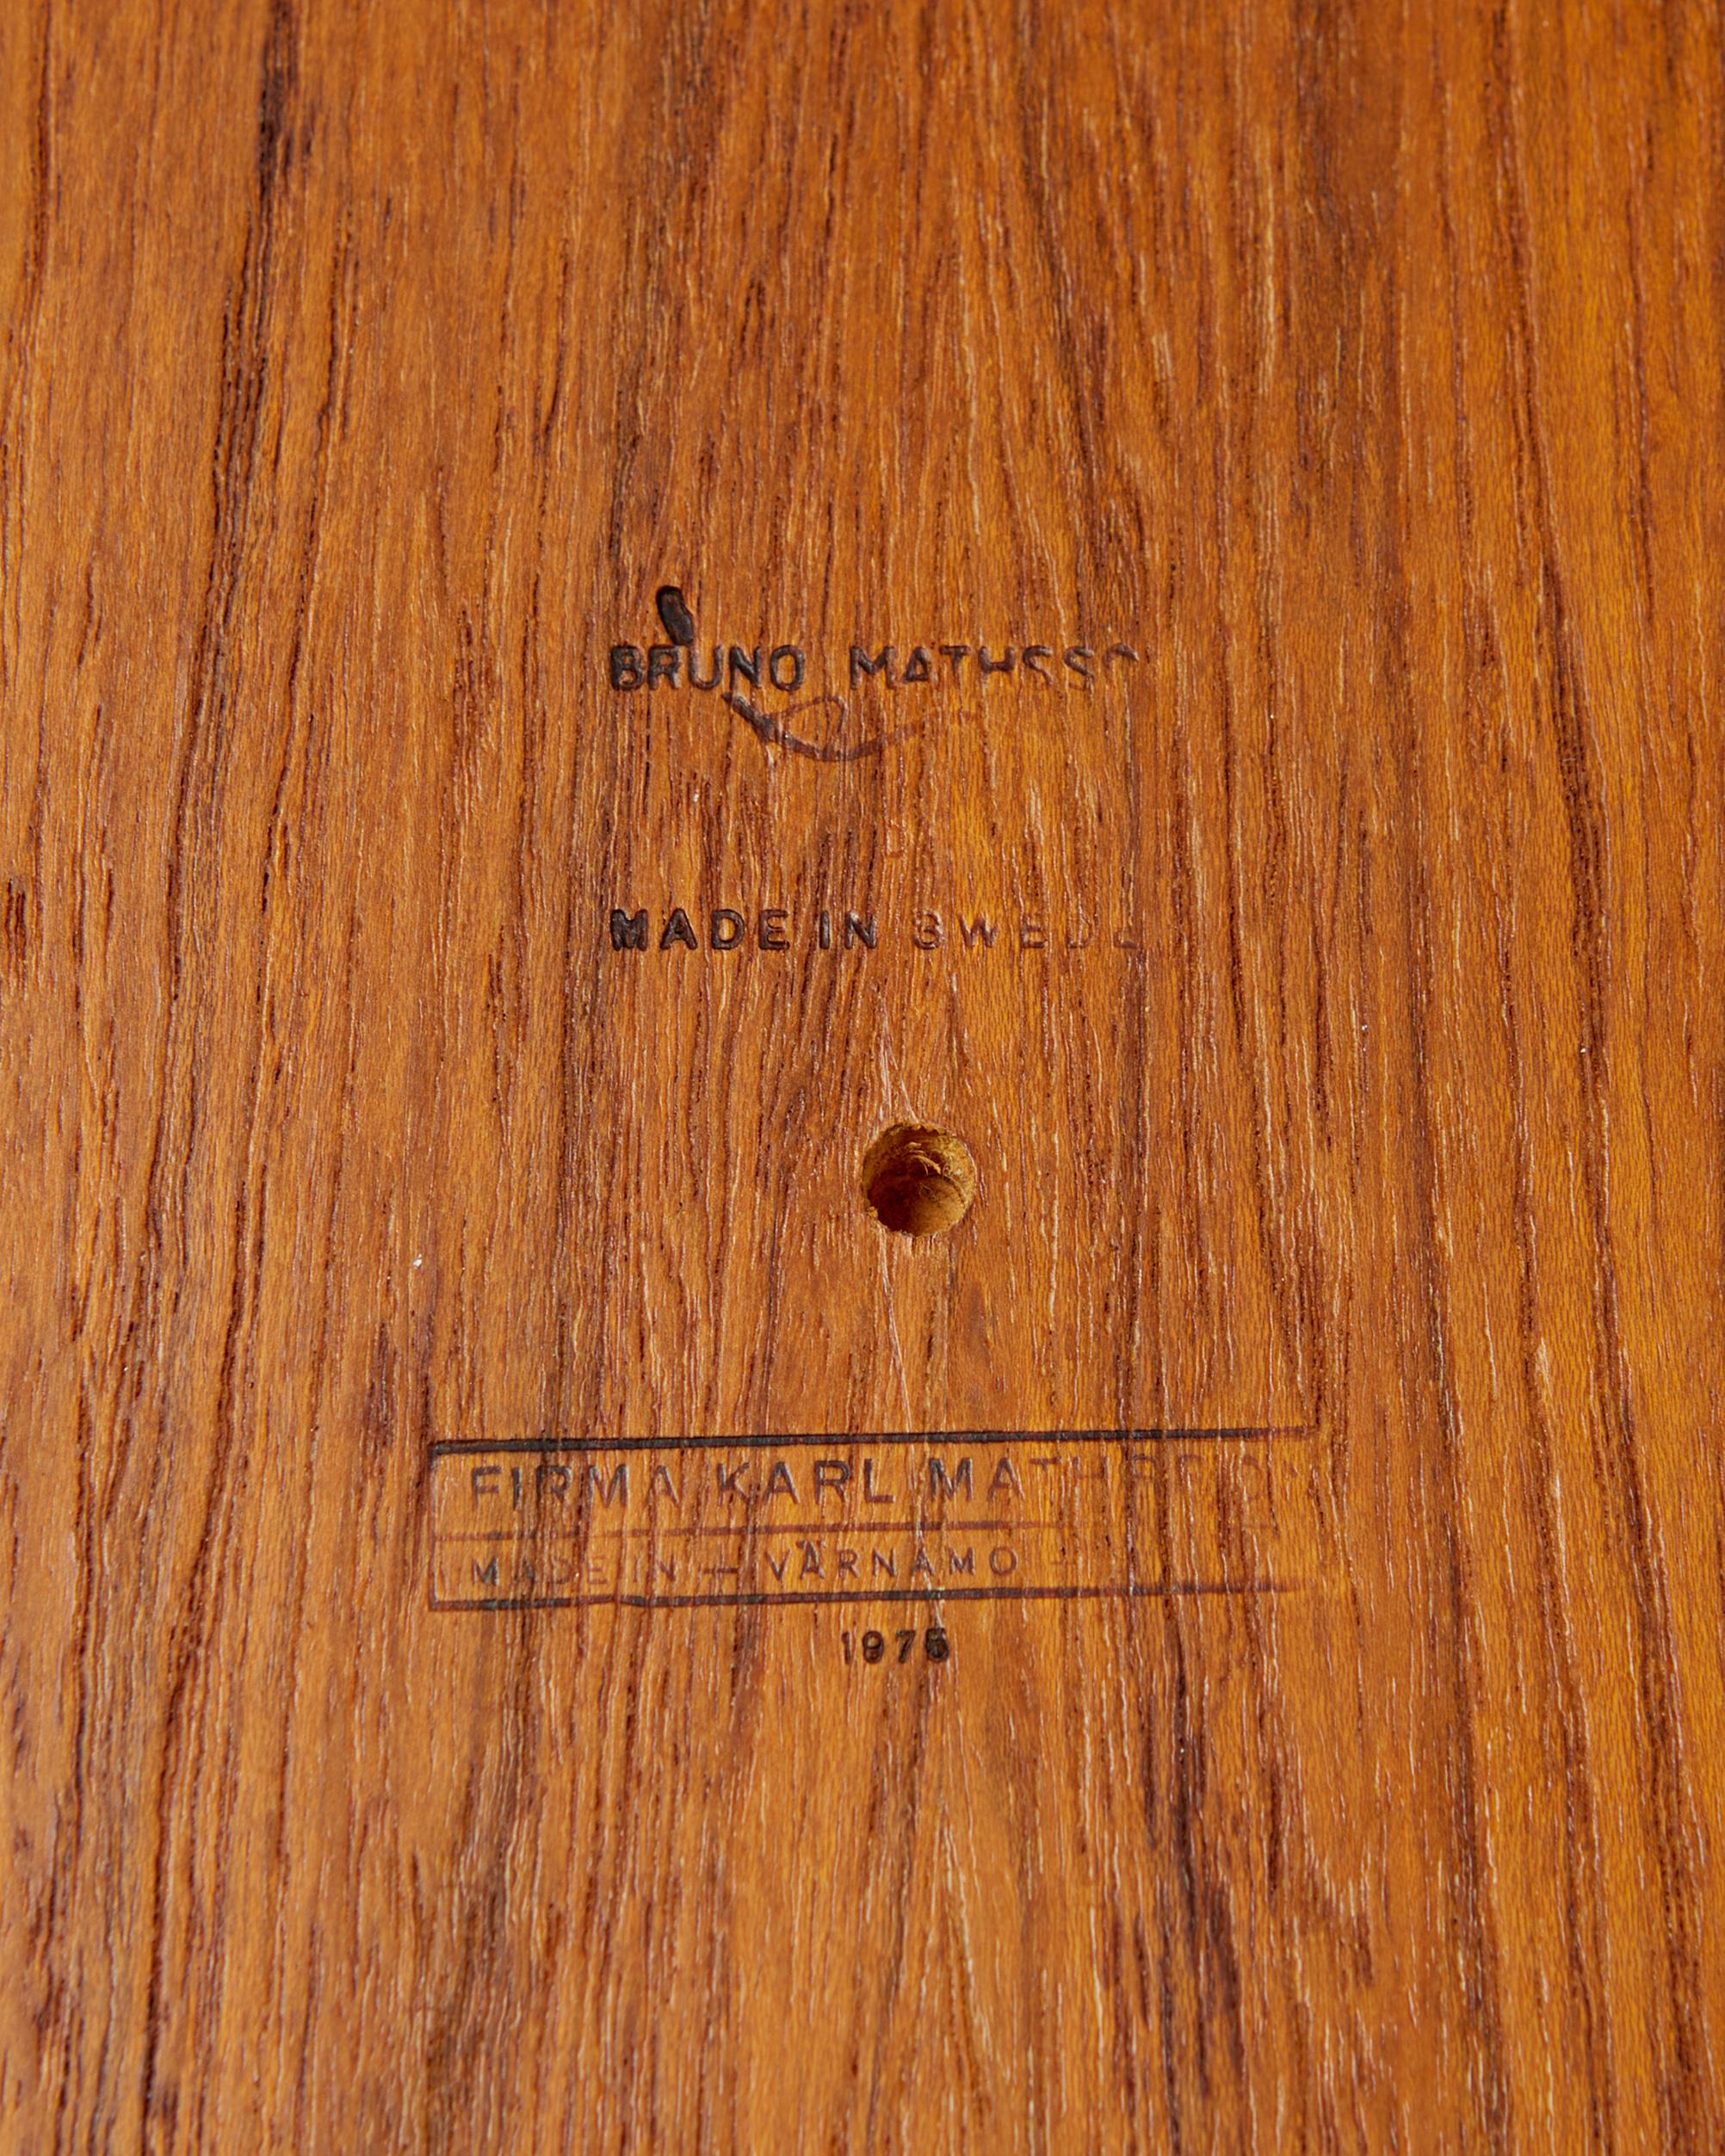 Birch Occasional Table “Annika” Designed by Bruno Mathsson for Karl Mathsson, Sweden 